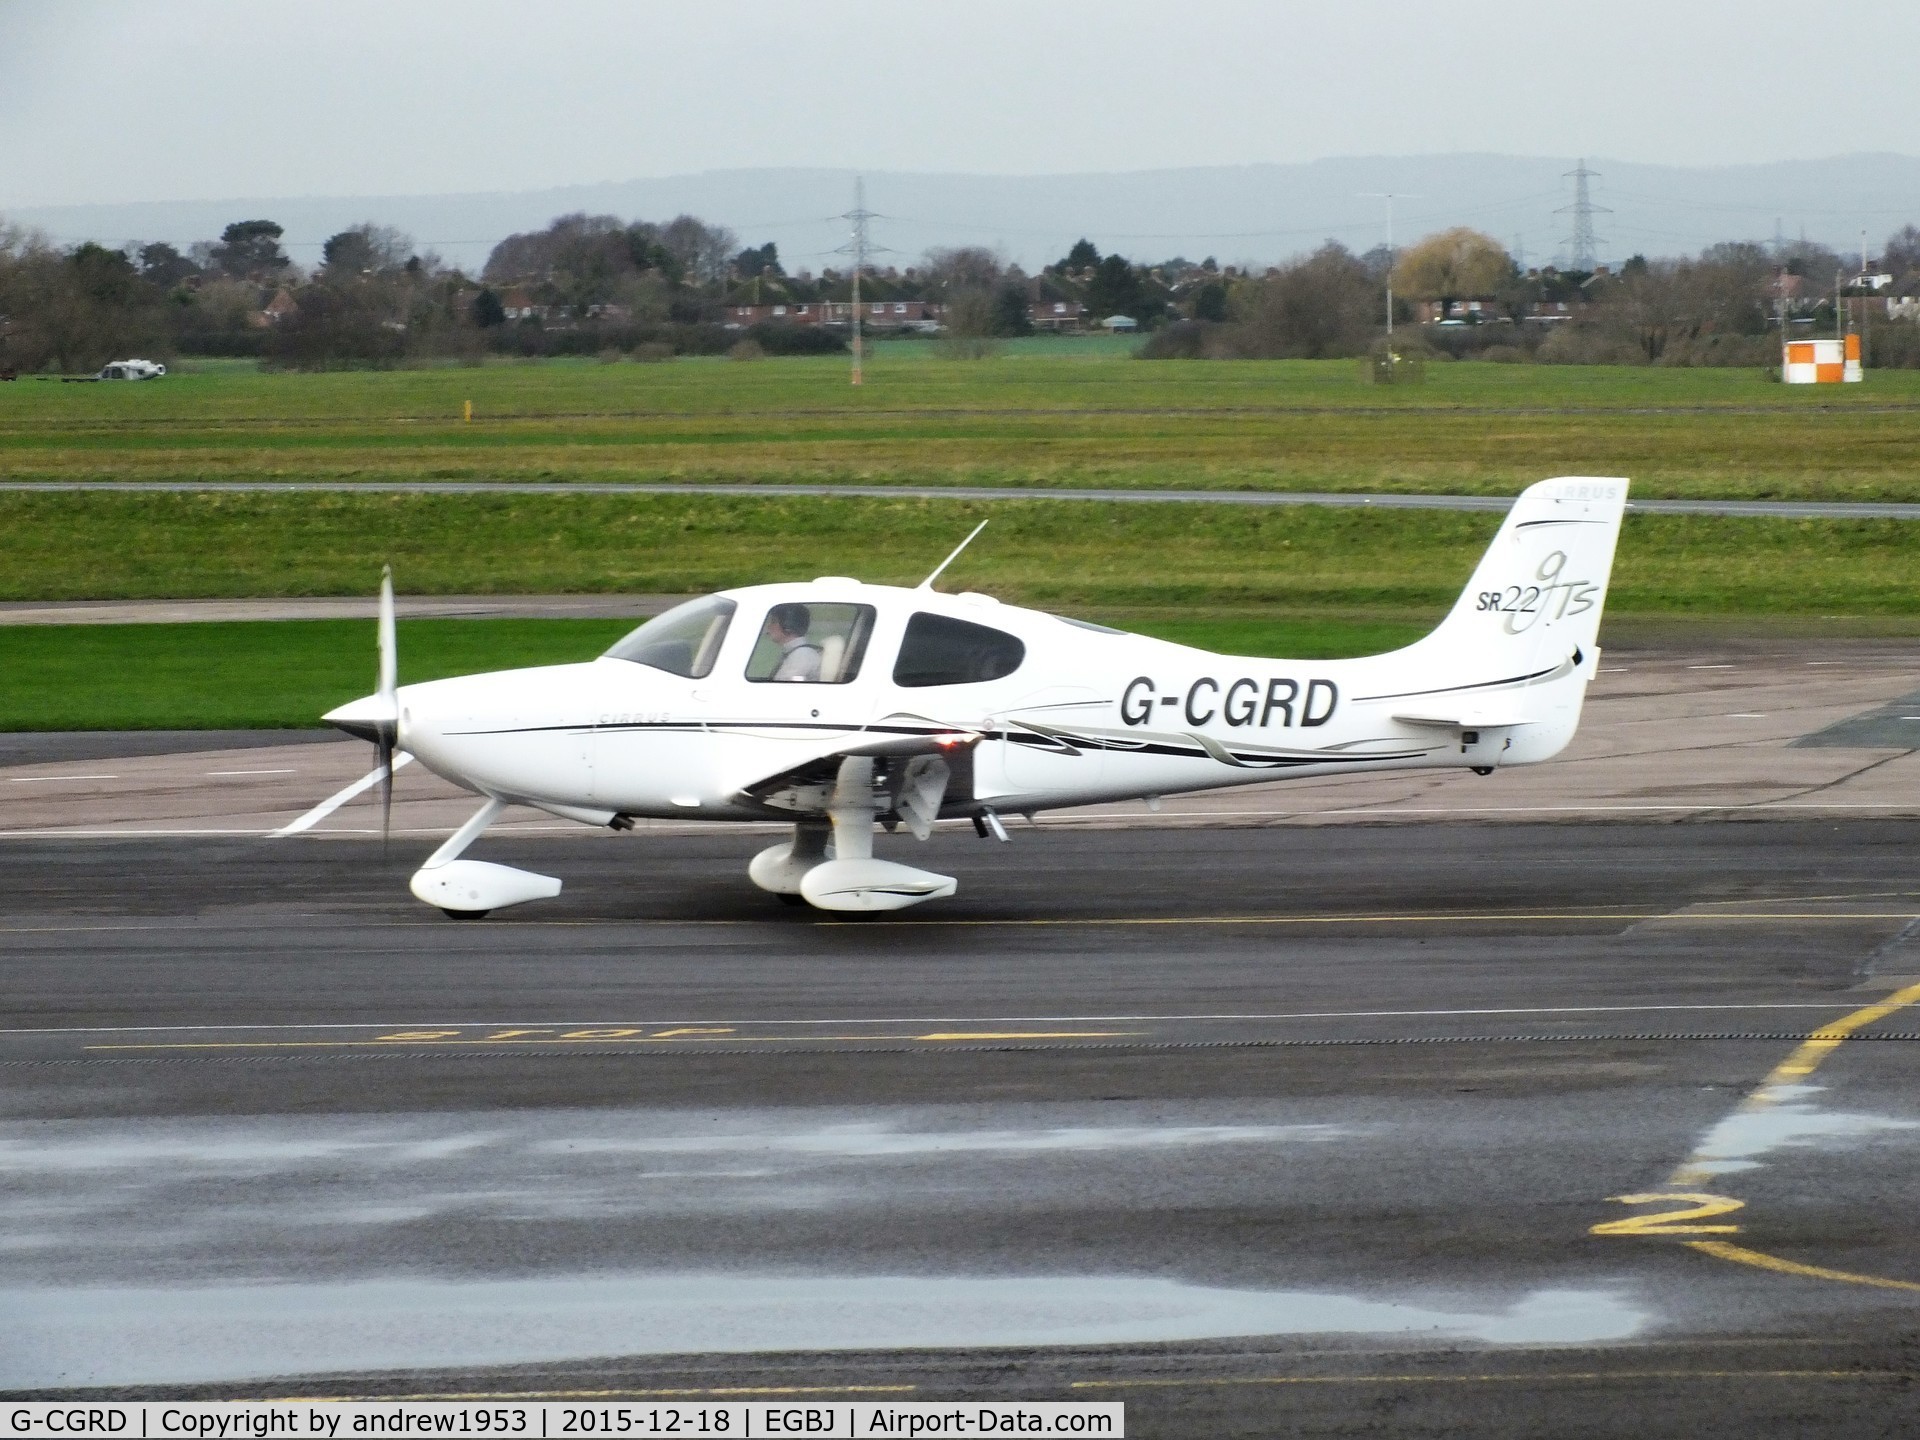 G-CGRD, 2006 Cirrus SR22 GTS C/N 2234, G-CGRD at Gloucestershire Airport.